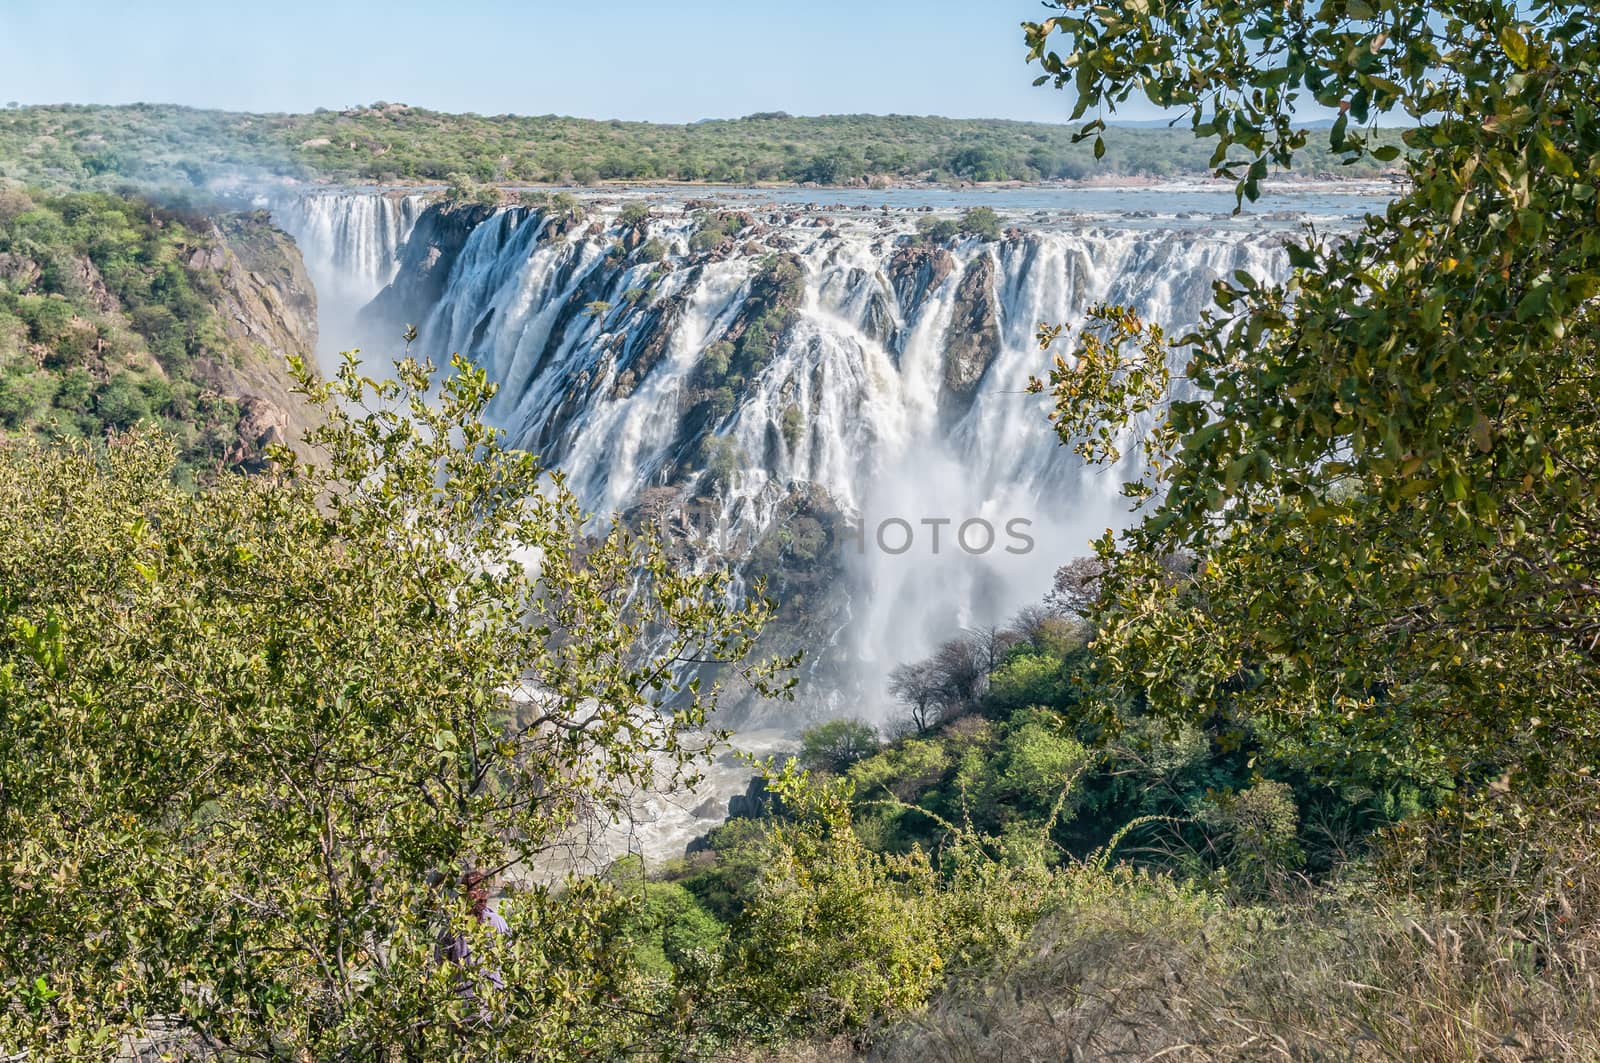 Ruacana waterfall in the Kunene River by dpreezg